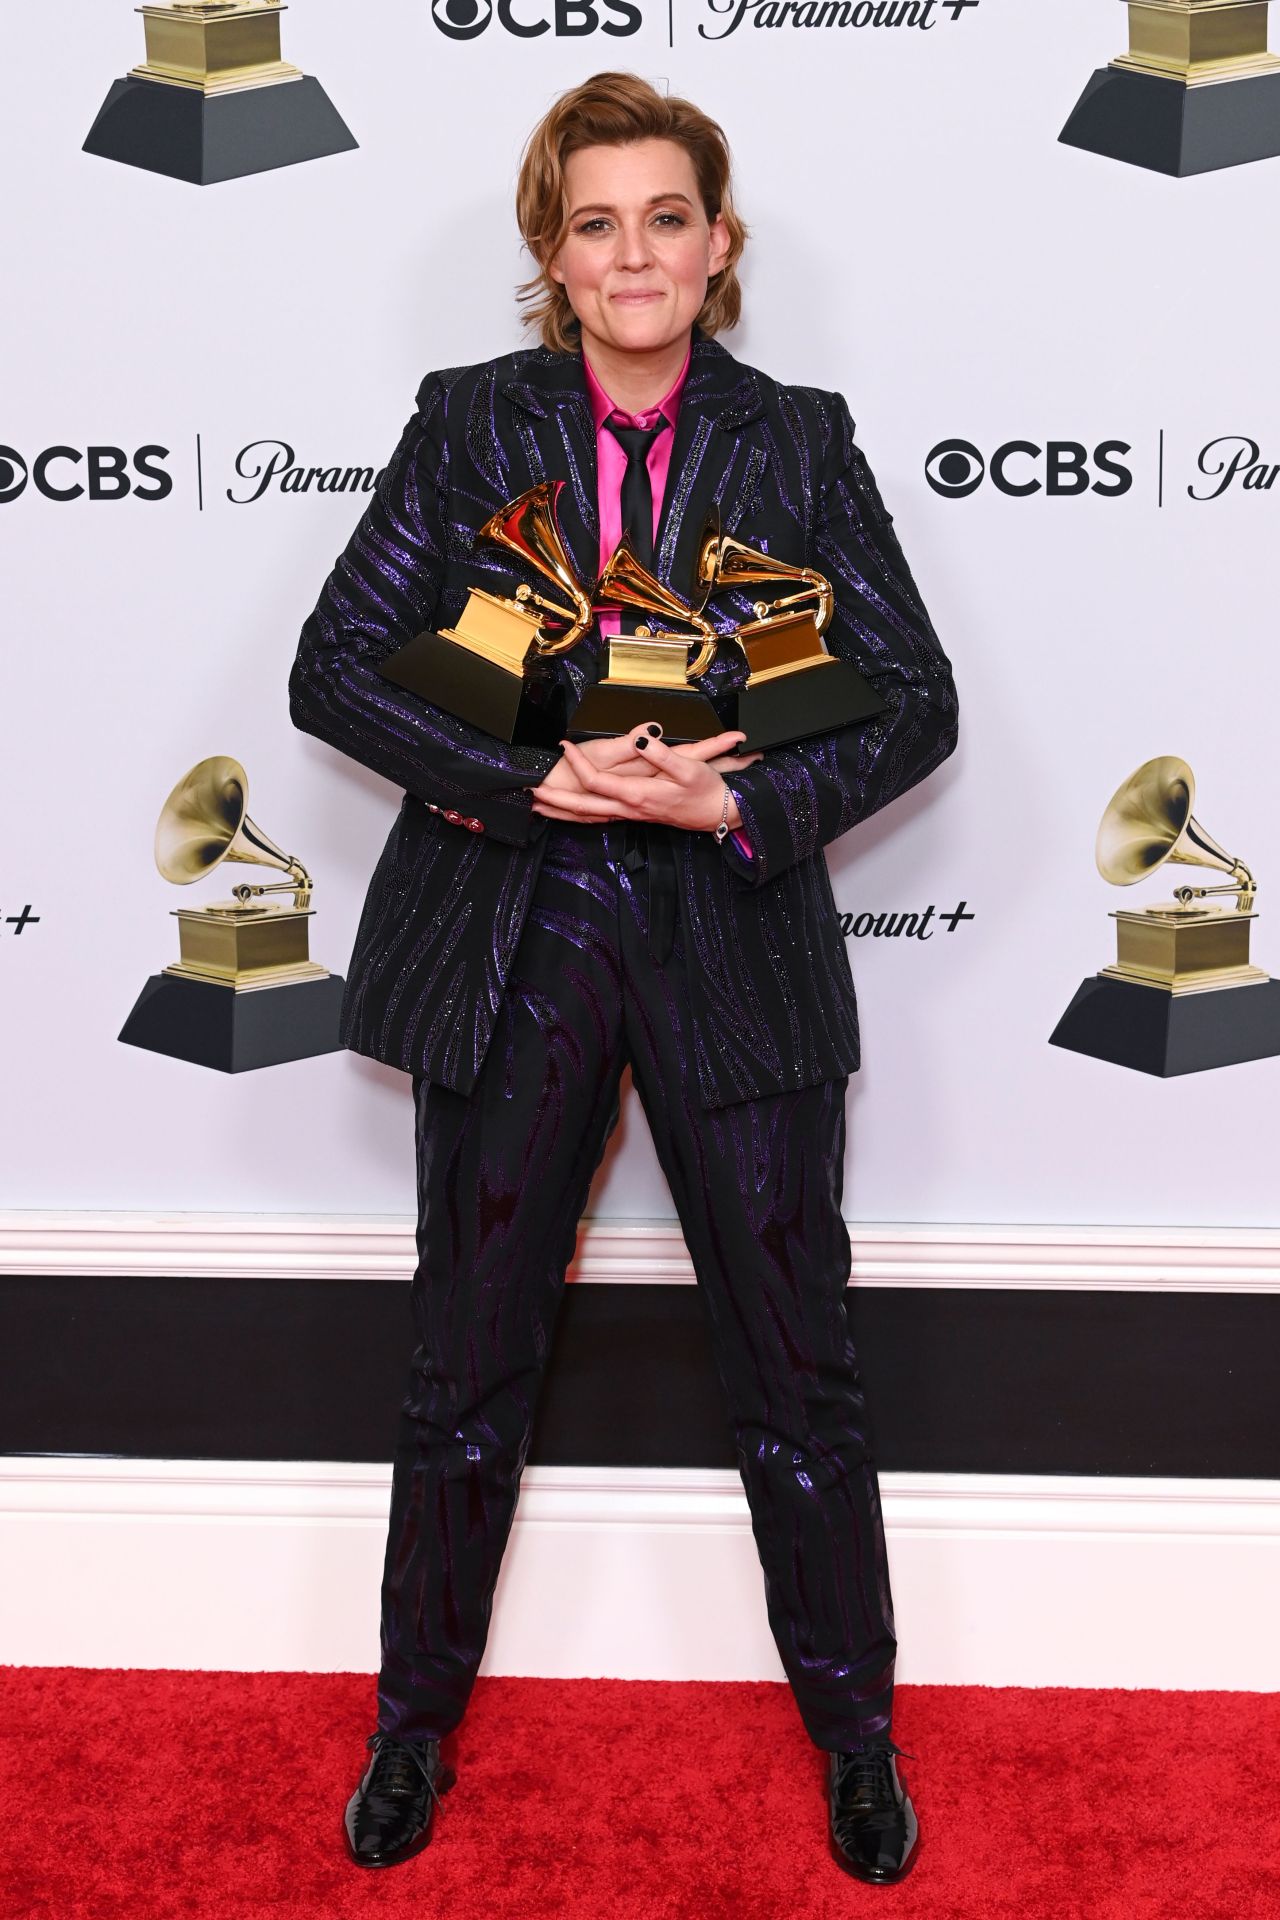 Brandi Carlile Grammys 2023 Moses Franklin